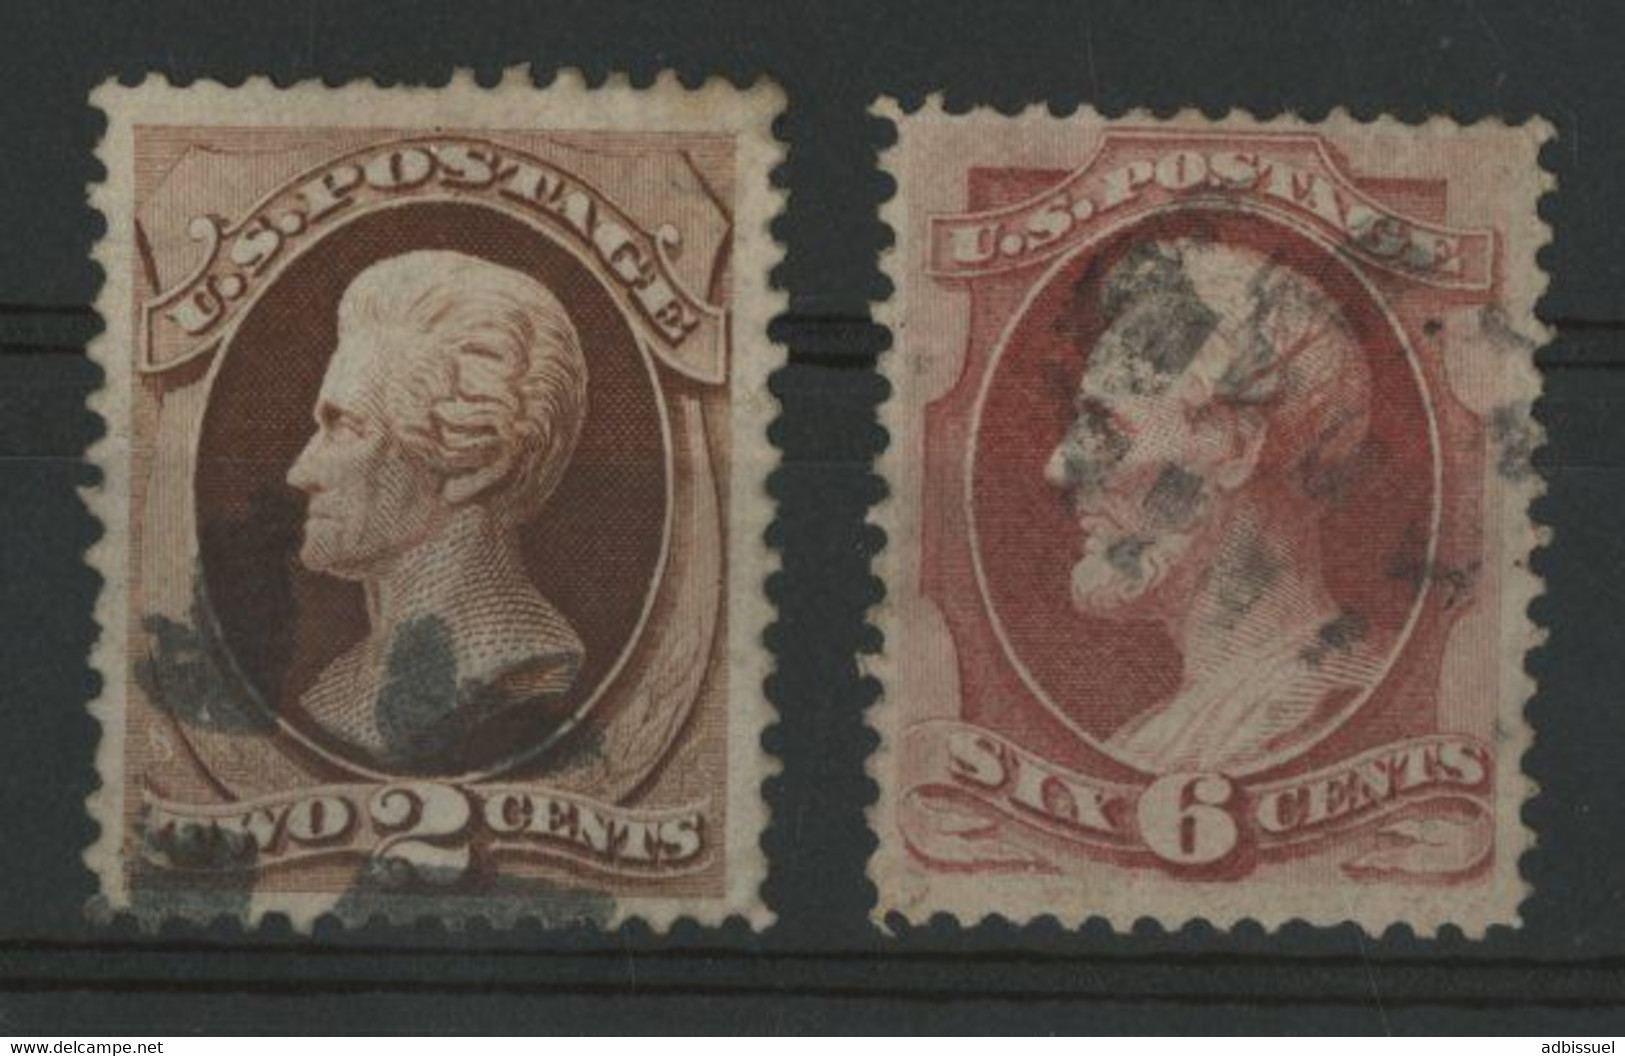 USA N° 40 + 42 (Scott 135 + 137) Oblitérés - Used Stamps